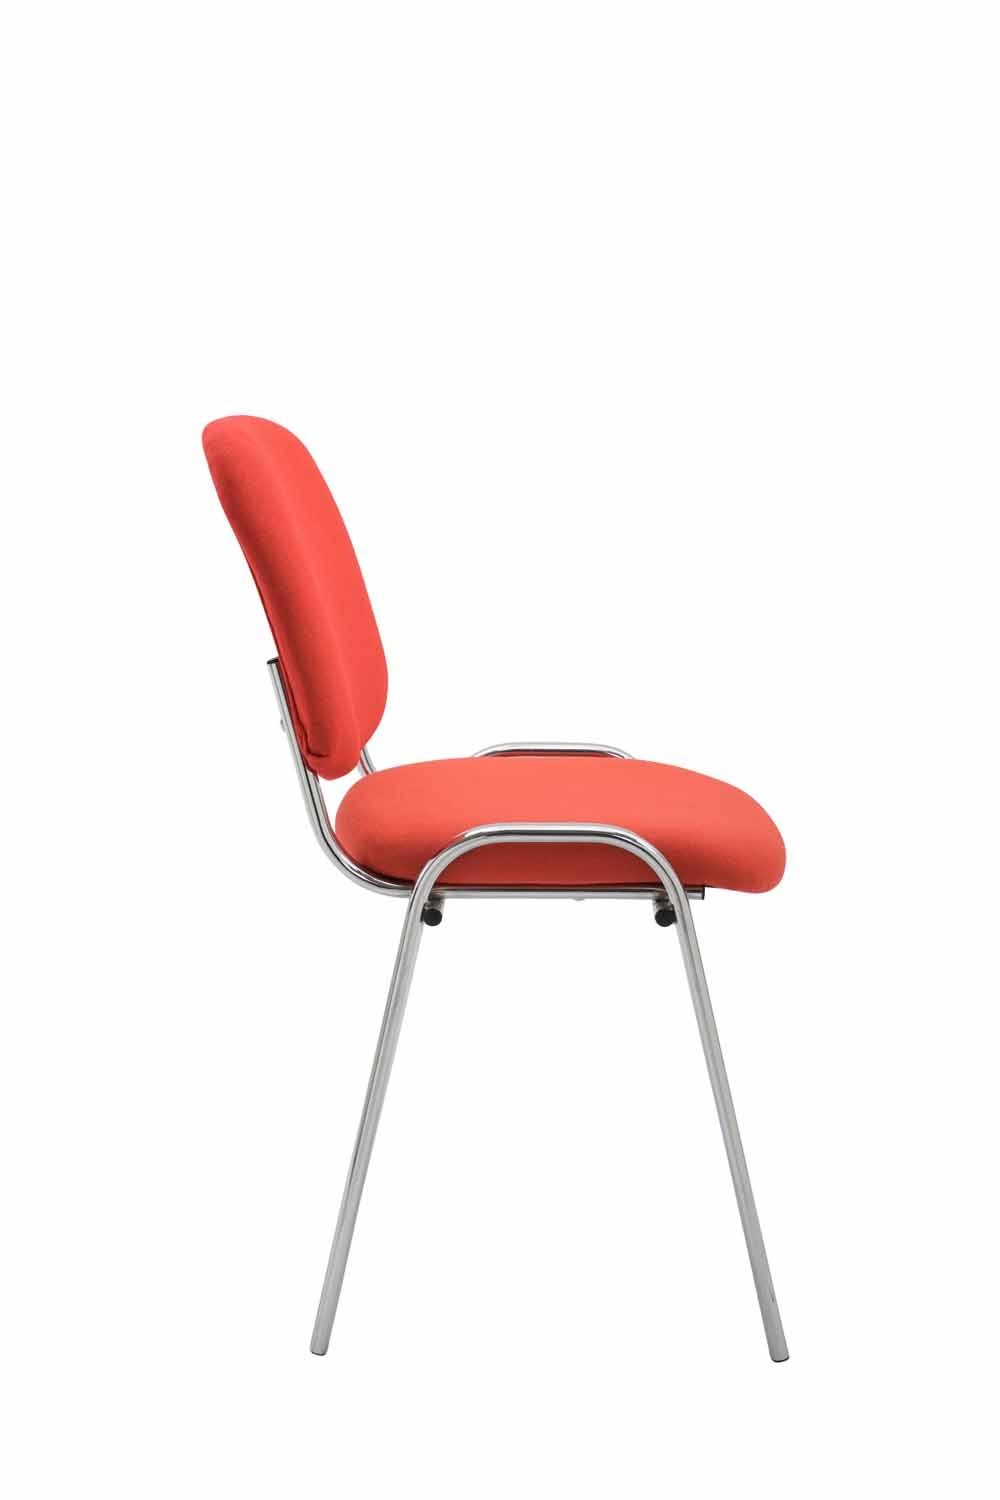 Besucherstuhl - - Stoff mit Gestell: rot (Besprechungsstuhl - Keen hochwertiger TPFLiving Konferenzstuhl Warteraumstuhl Messestuhl), - chrom Sitzfläche: Polsterung Metall